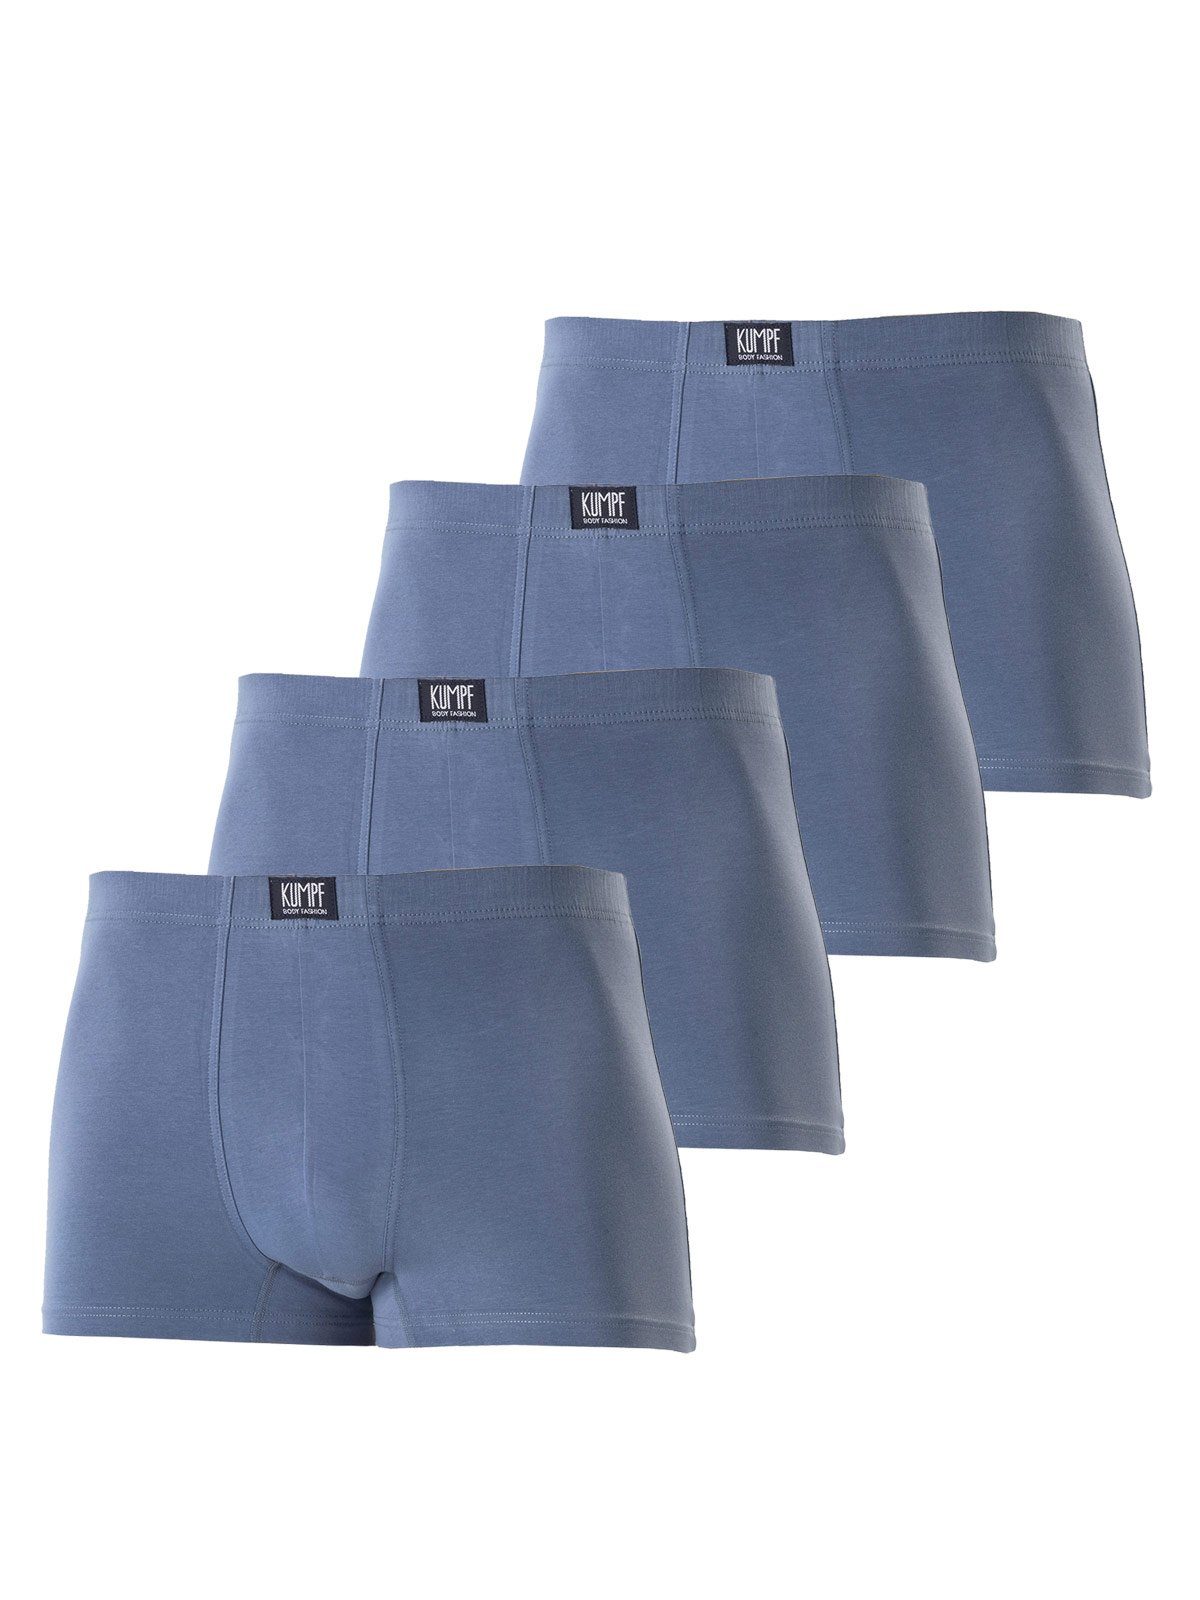 KUMPF Retro Pants 4er Sparpack Herren Pants Bio Cotton (Spar-Set, 4-St) hohe Markenqualität stahl